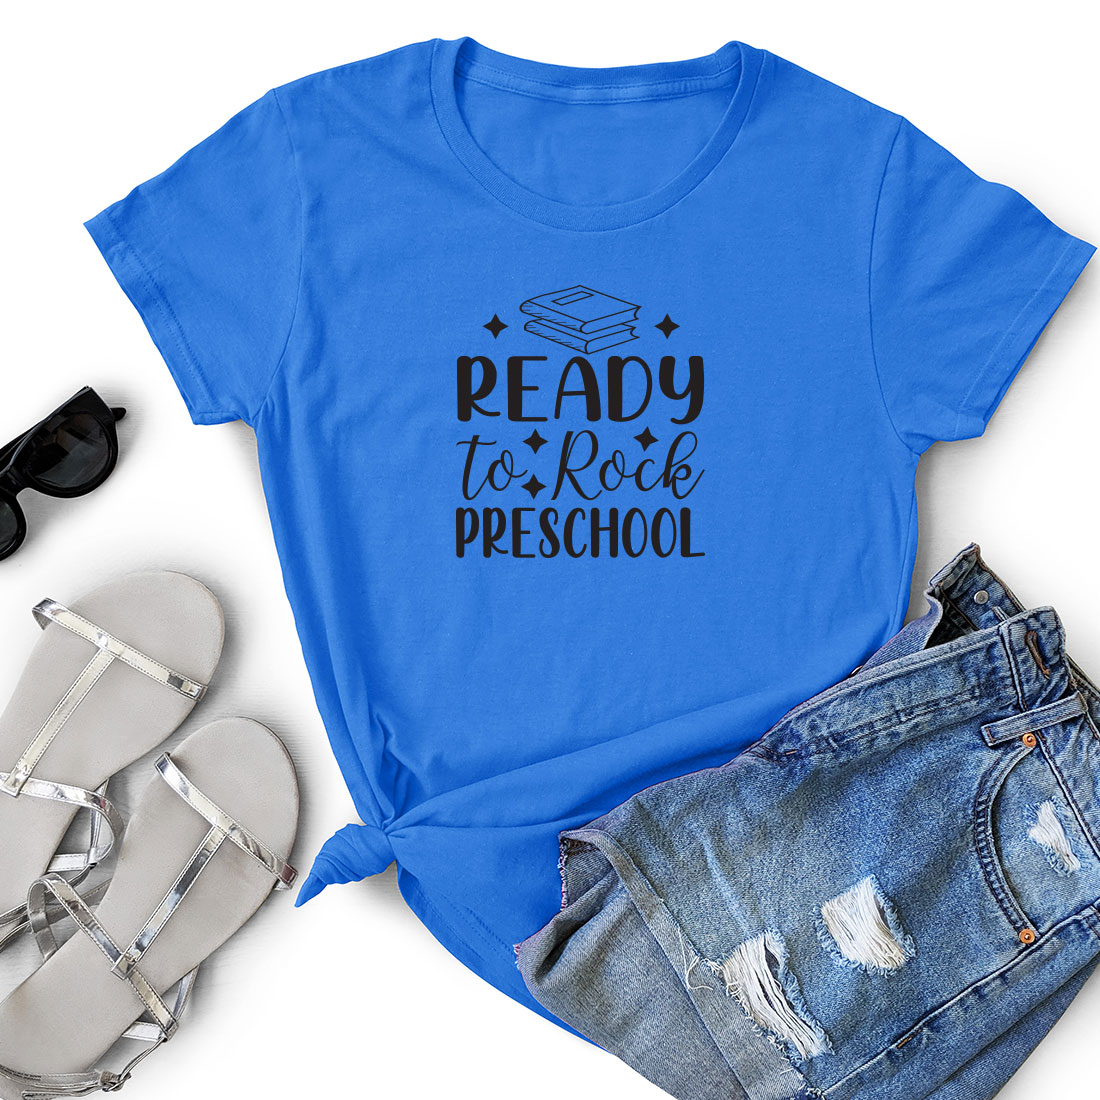 T - shirt that reads ready to rock preschool.